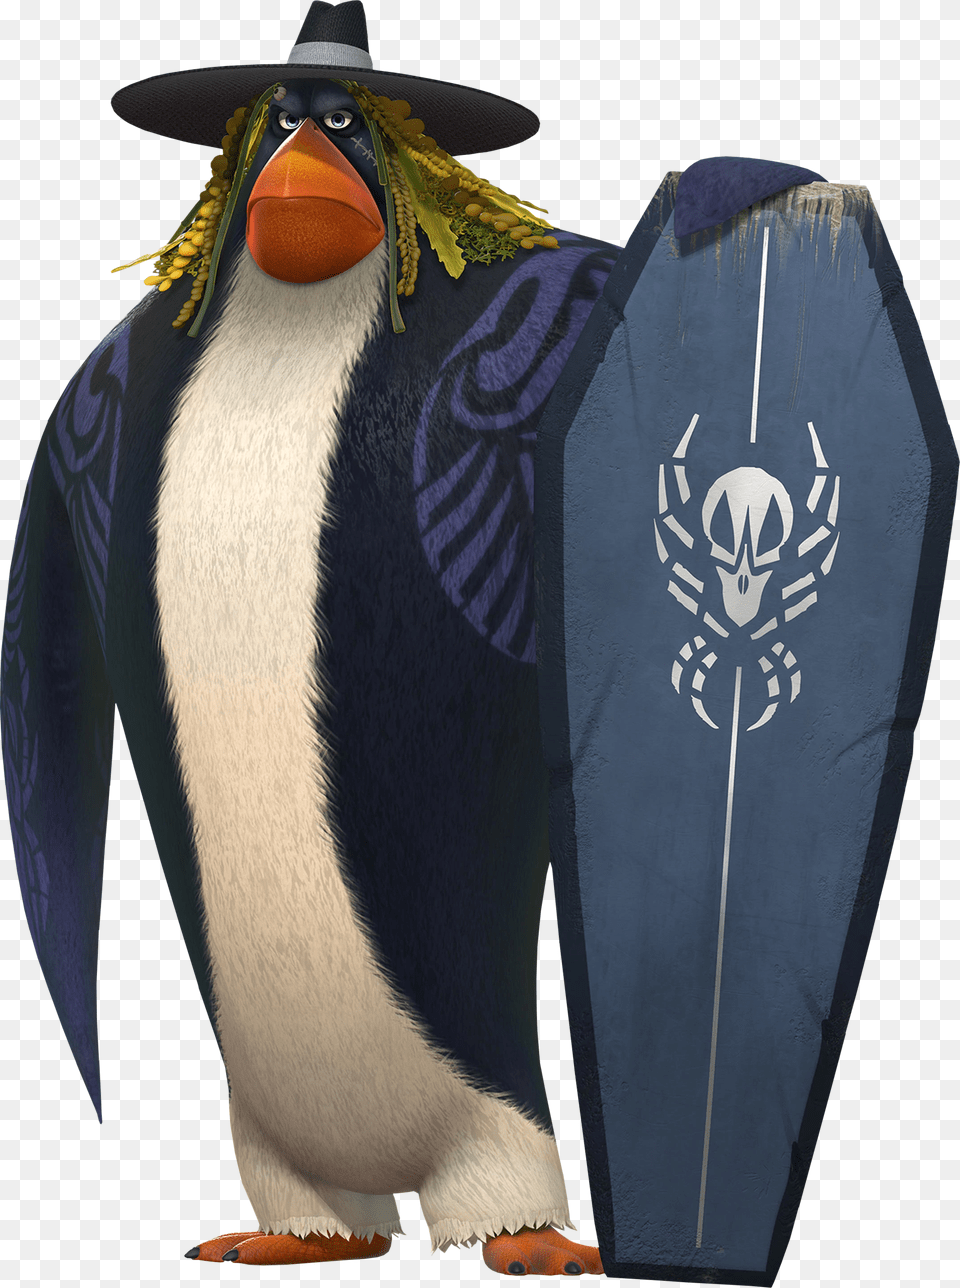 S Up Wiki Undertaker Penguin, Animal, Bird, King Penguin Free Png Download